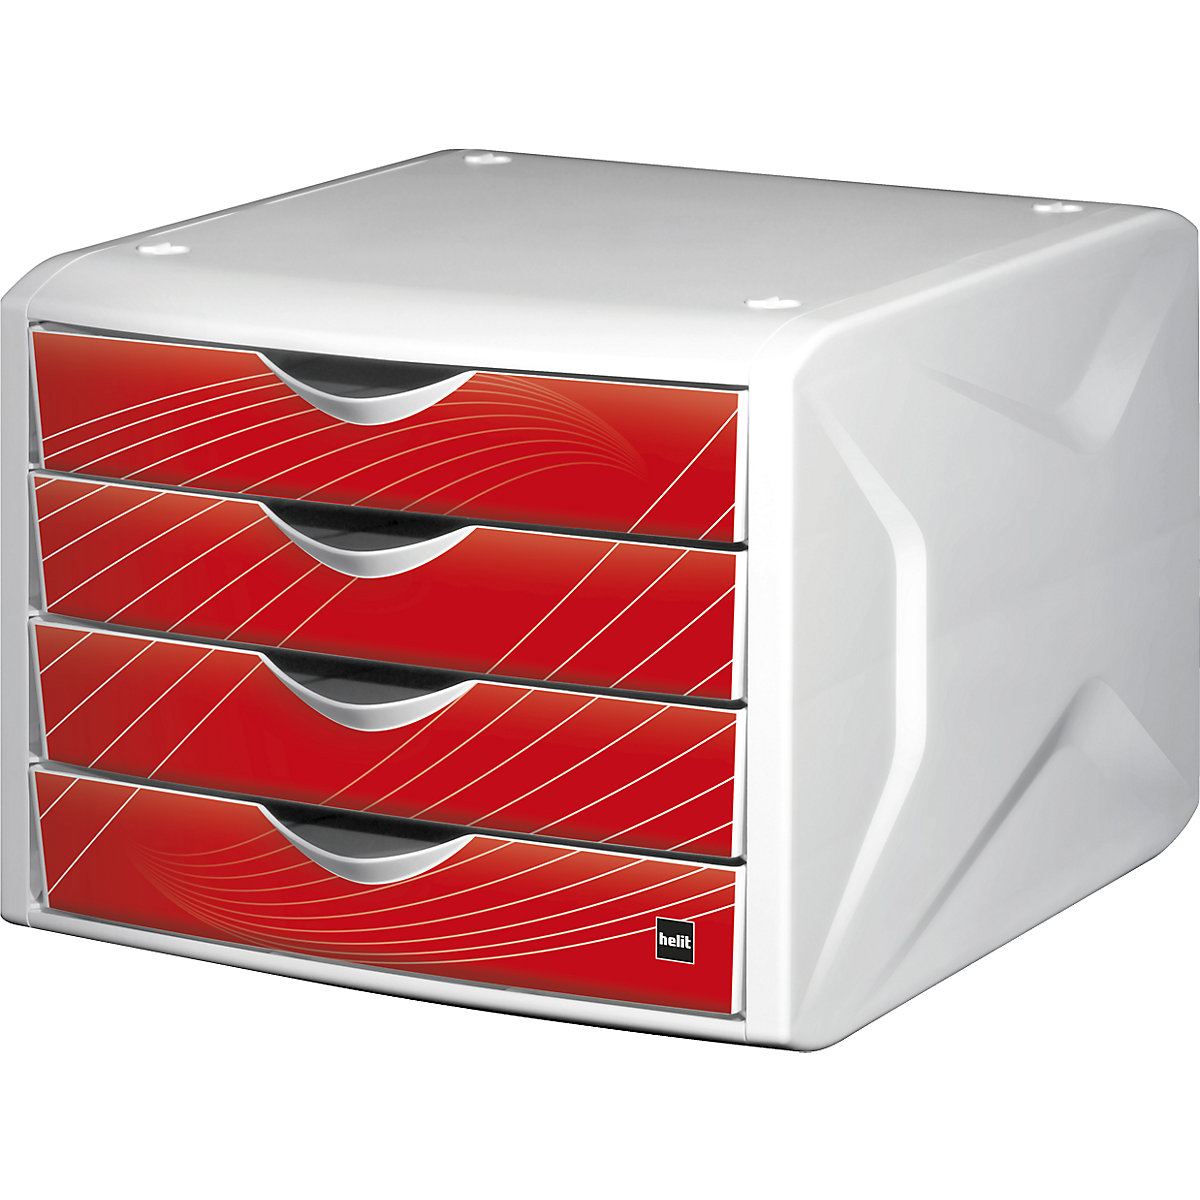 Cutie cu sertare – helit, î. x lăț. x ad. 212 x 262 x 330 mm, amb. 5 buc., design sertare red rook